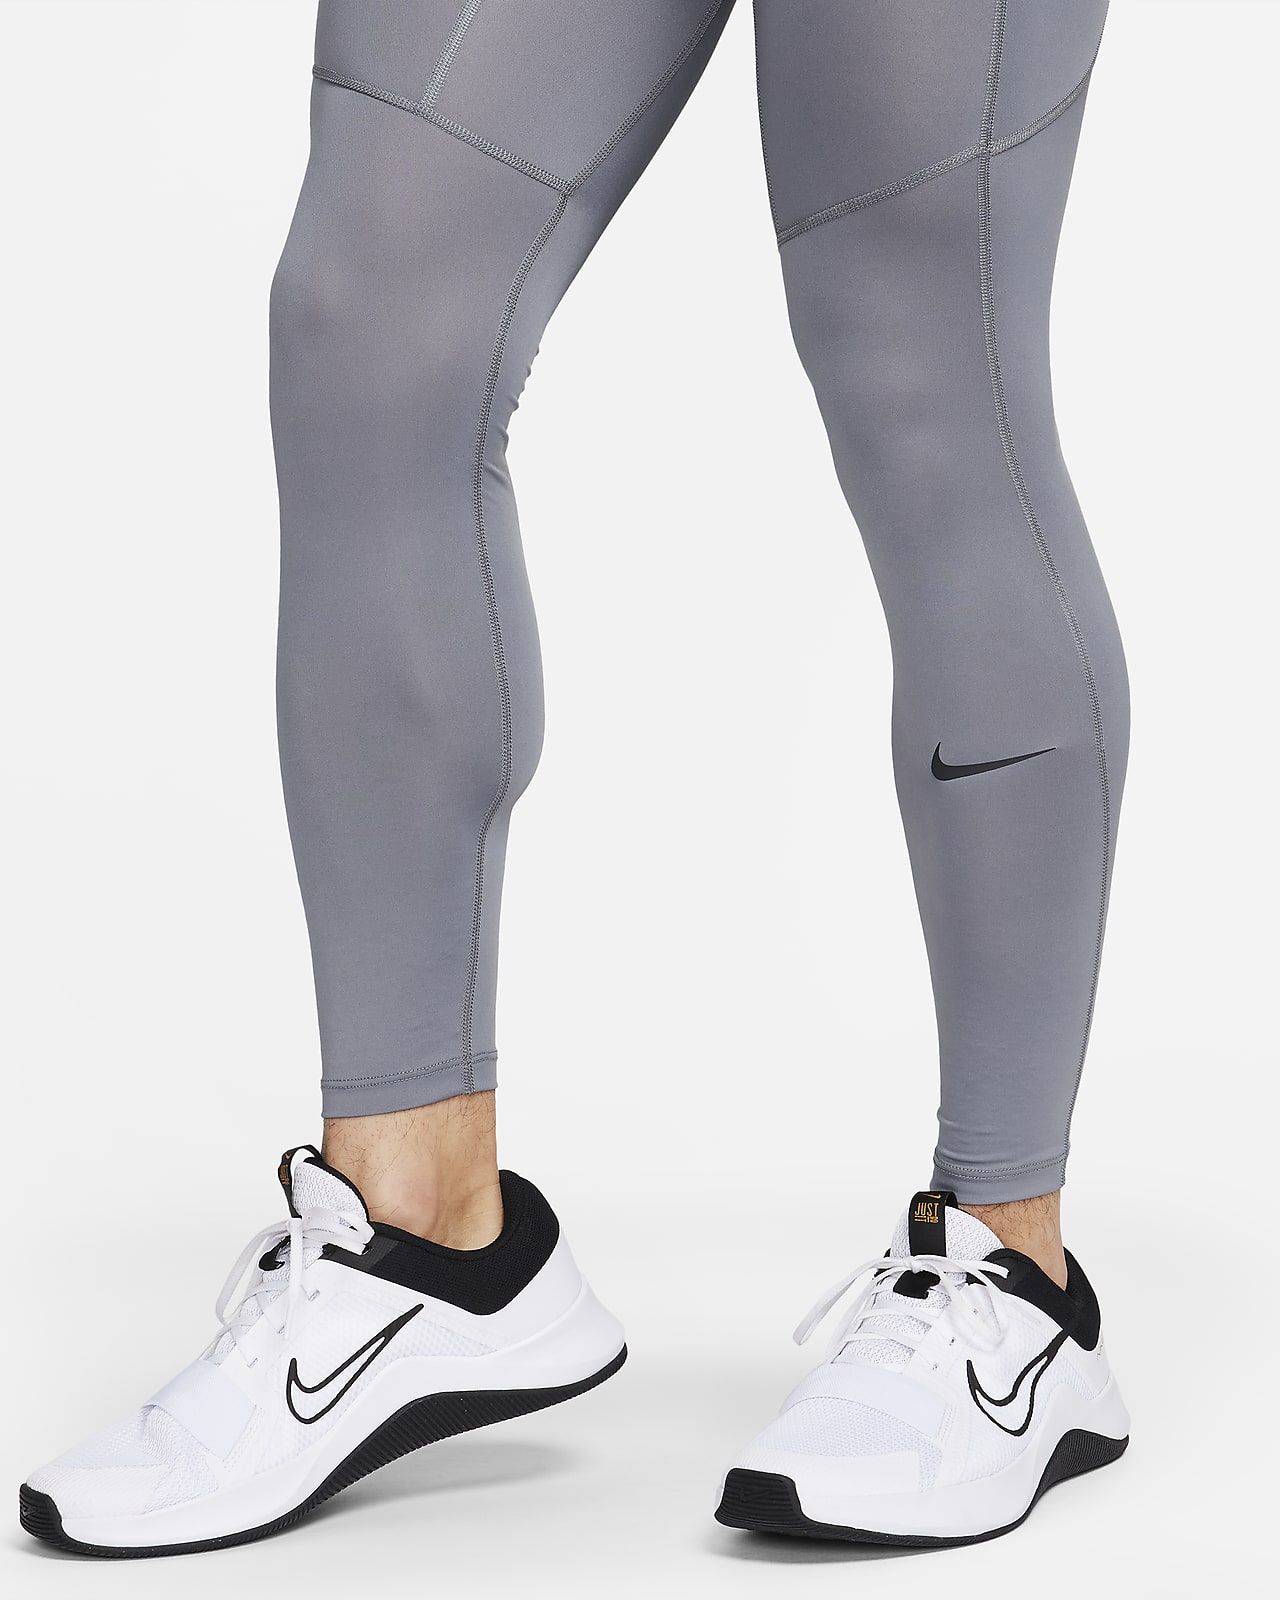 Football Tights & Leggings. Nike LU